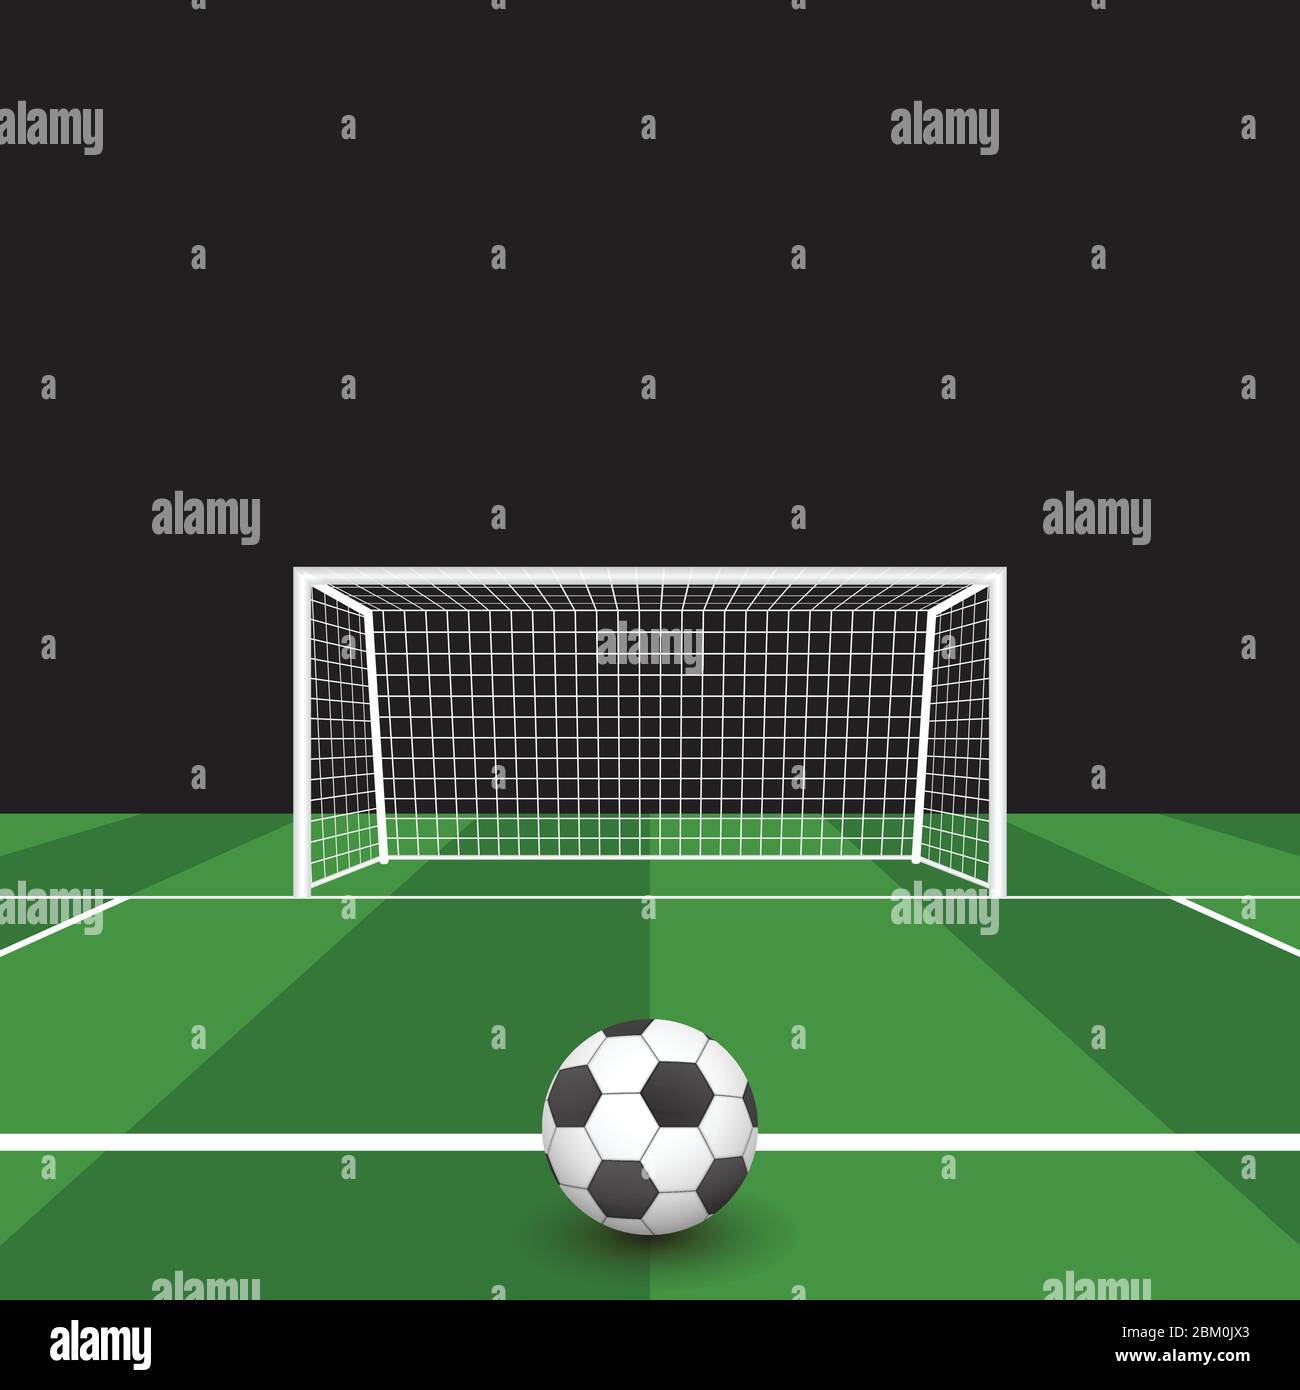 Fußball auf dem Rasen vor dem Ziel Vektor-Illustration Stock Vektor